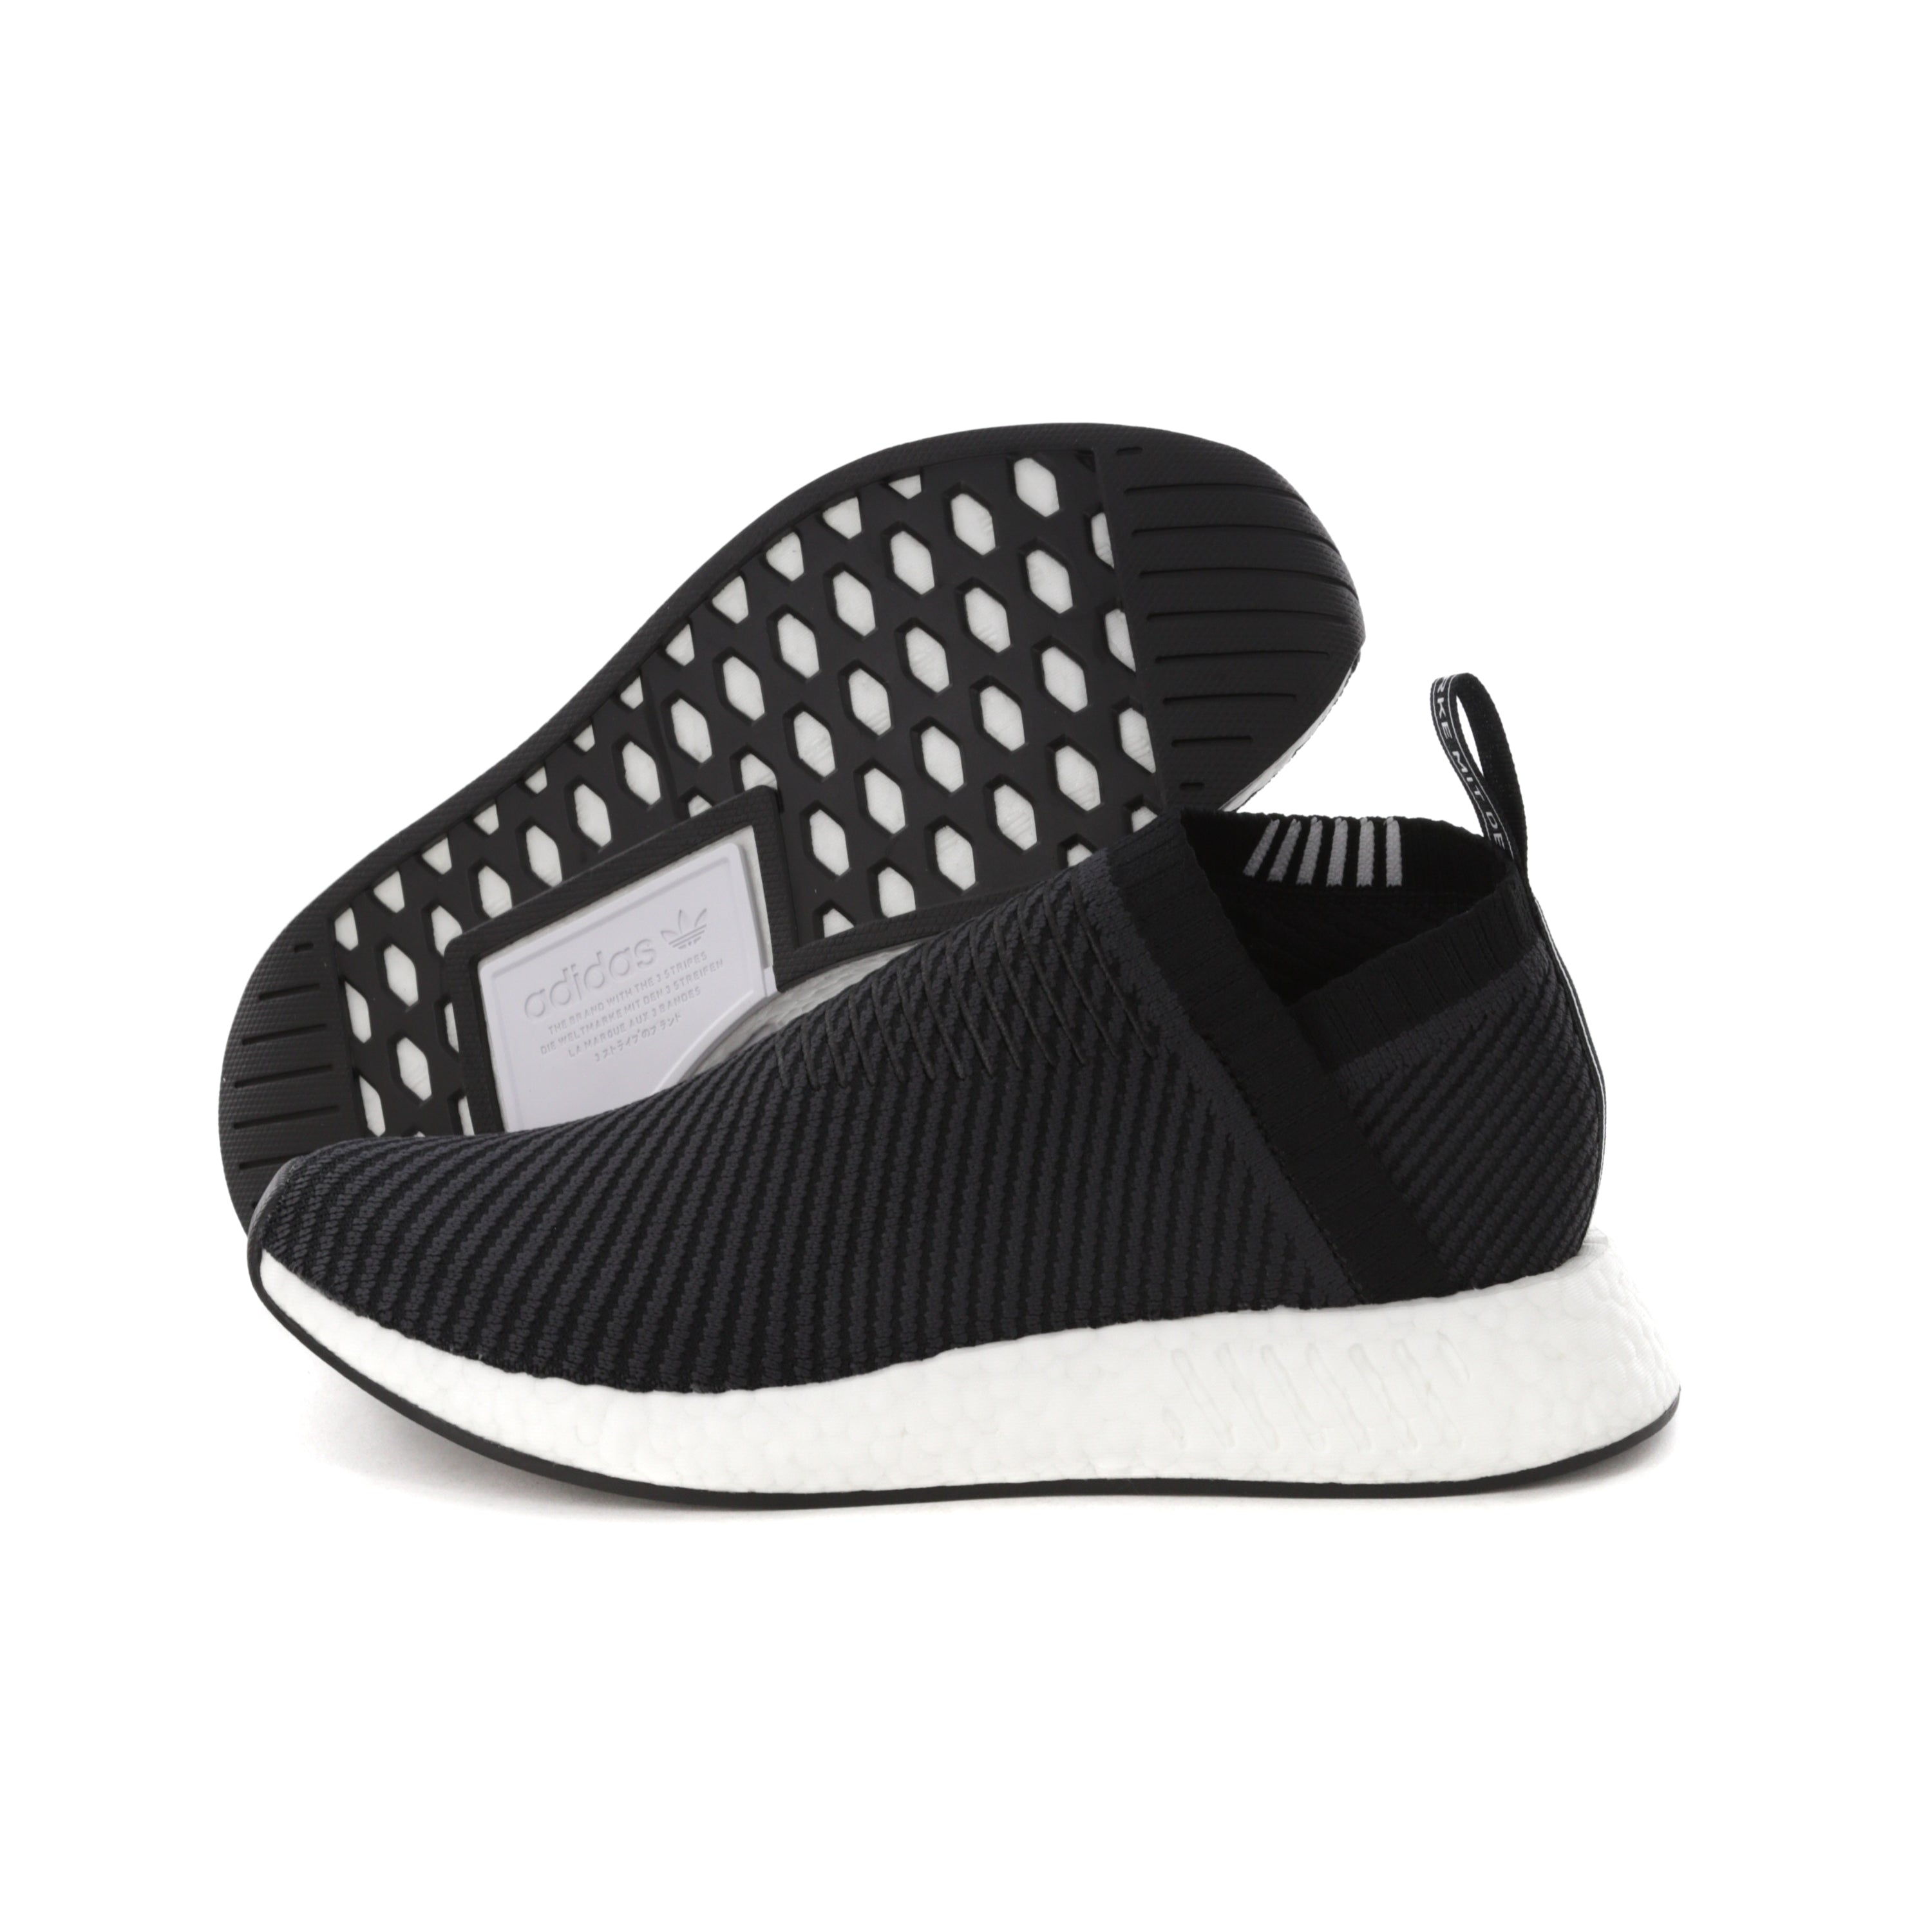 Adidas NMD CS2 Primeknit Black/White 